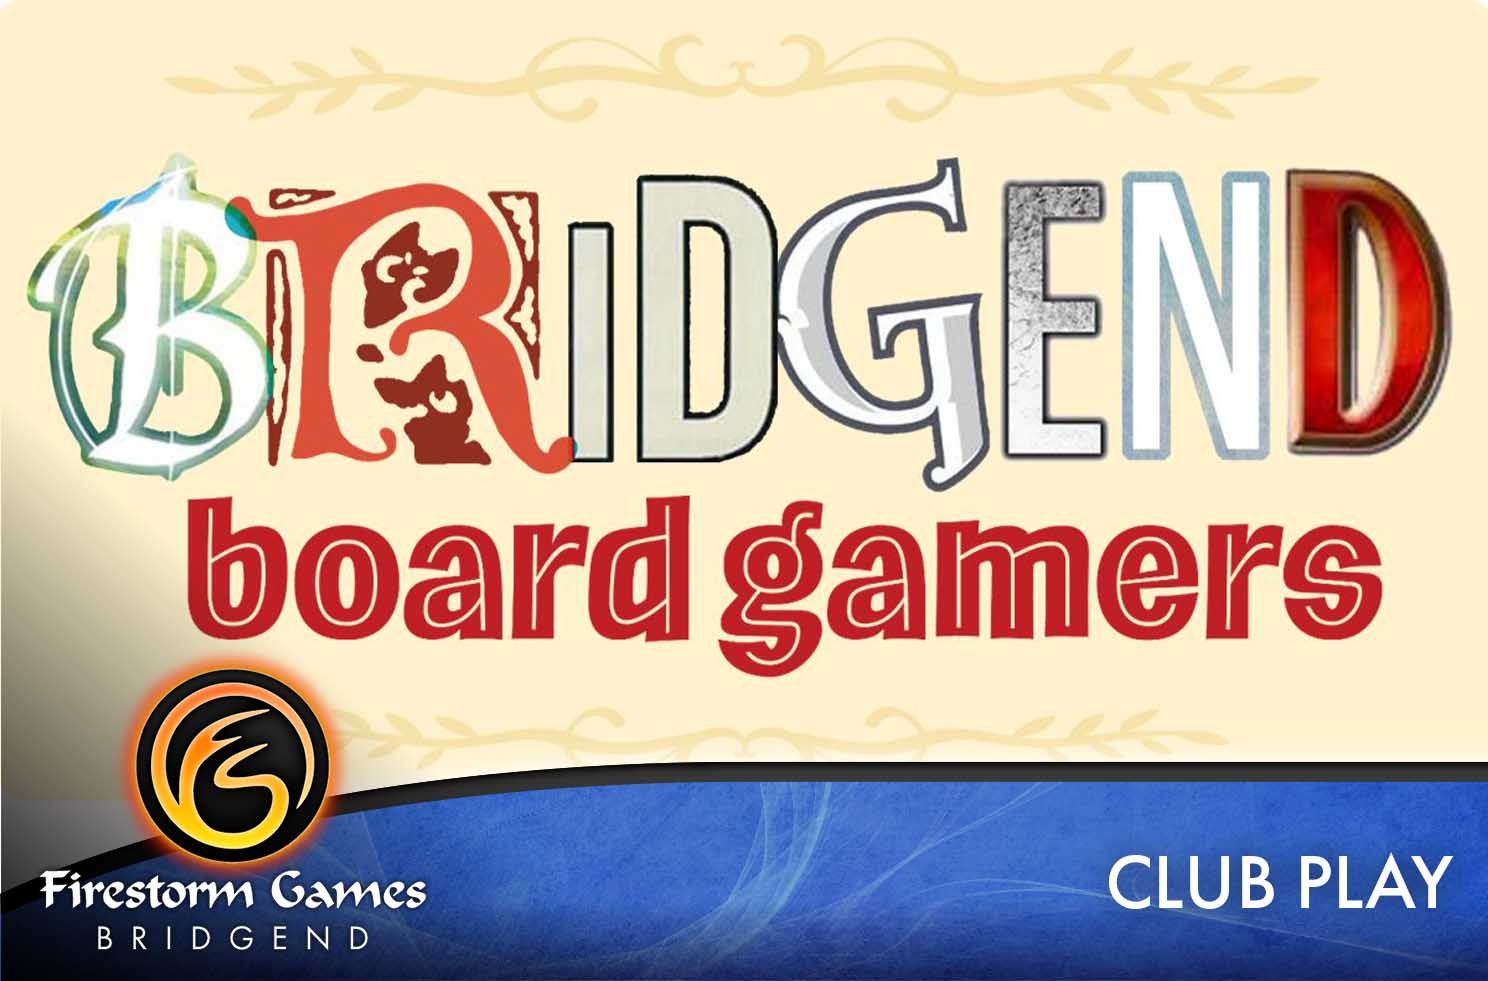 Bridgend Board Gamers at Firestorm Games Tuesday